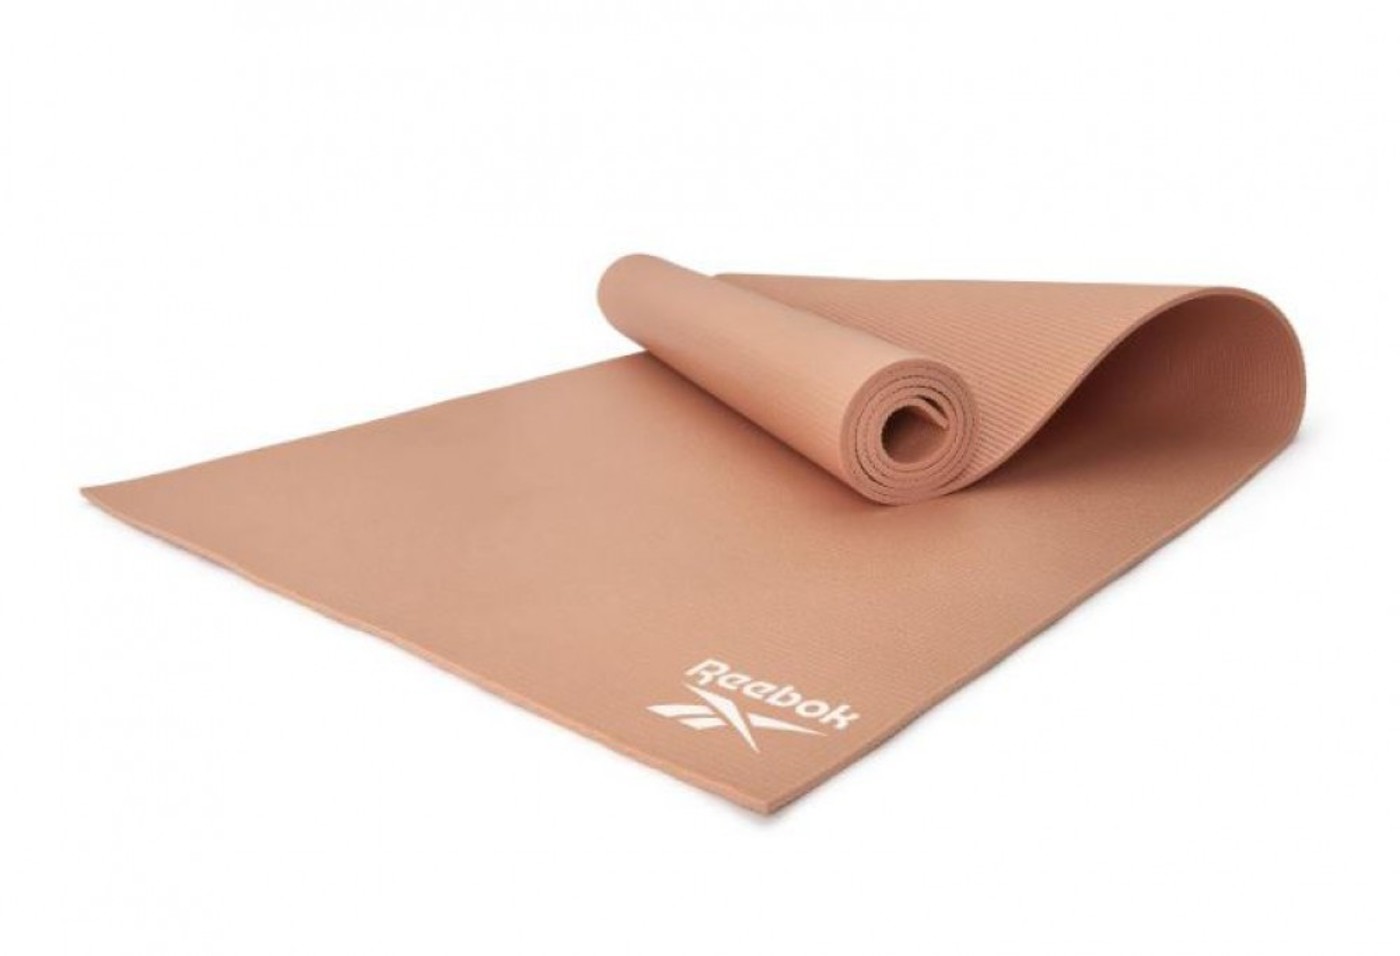 REEBOK Yoga Mat - 4mm